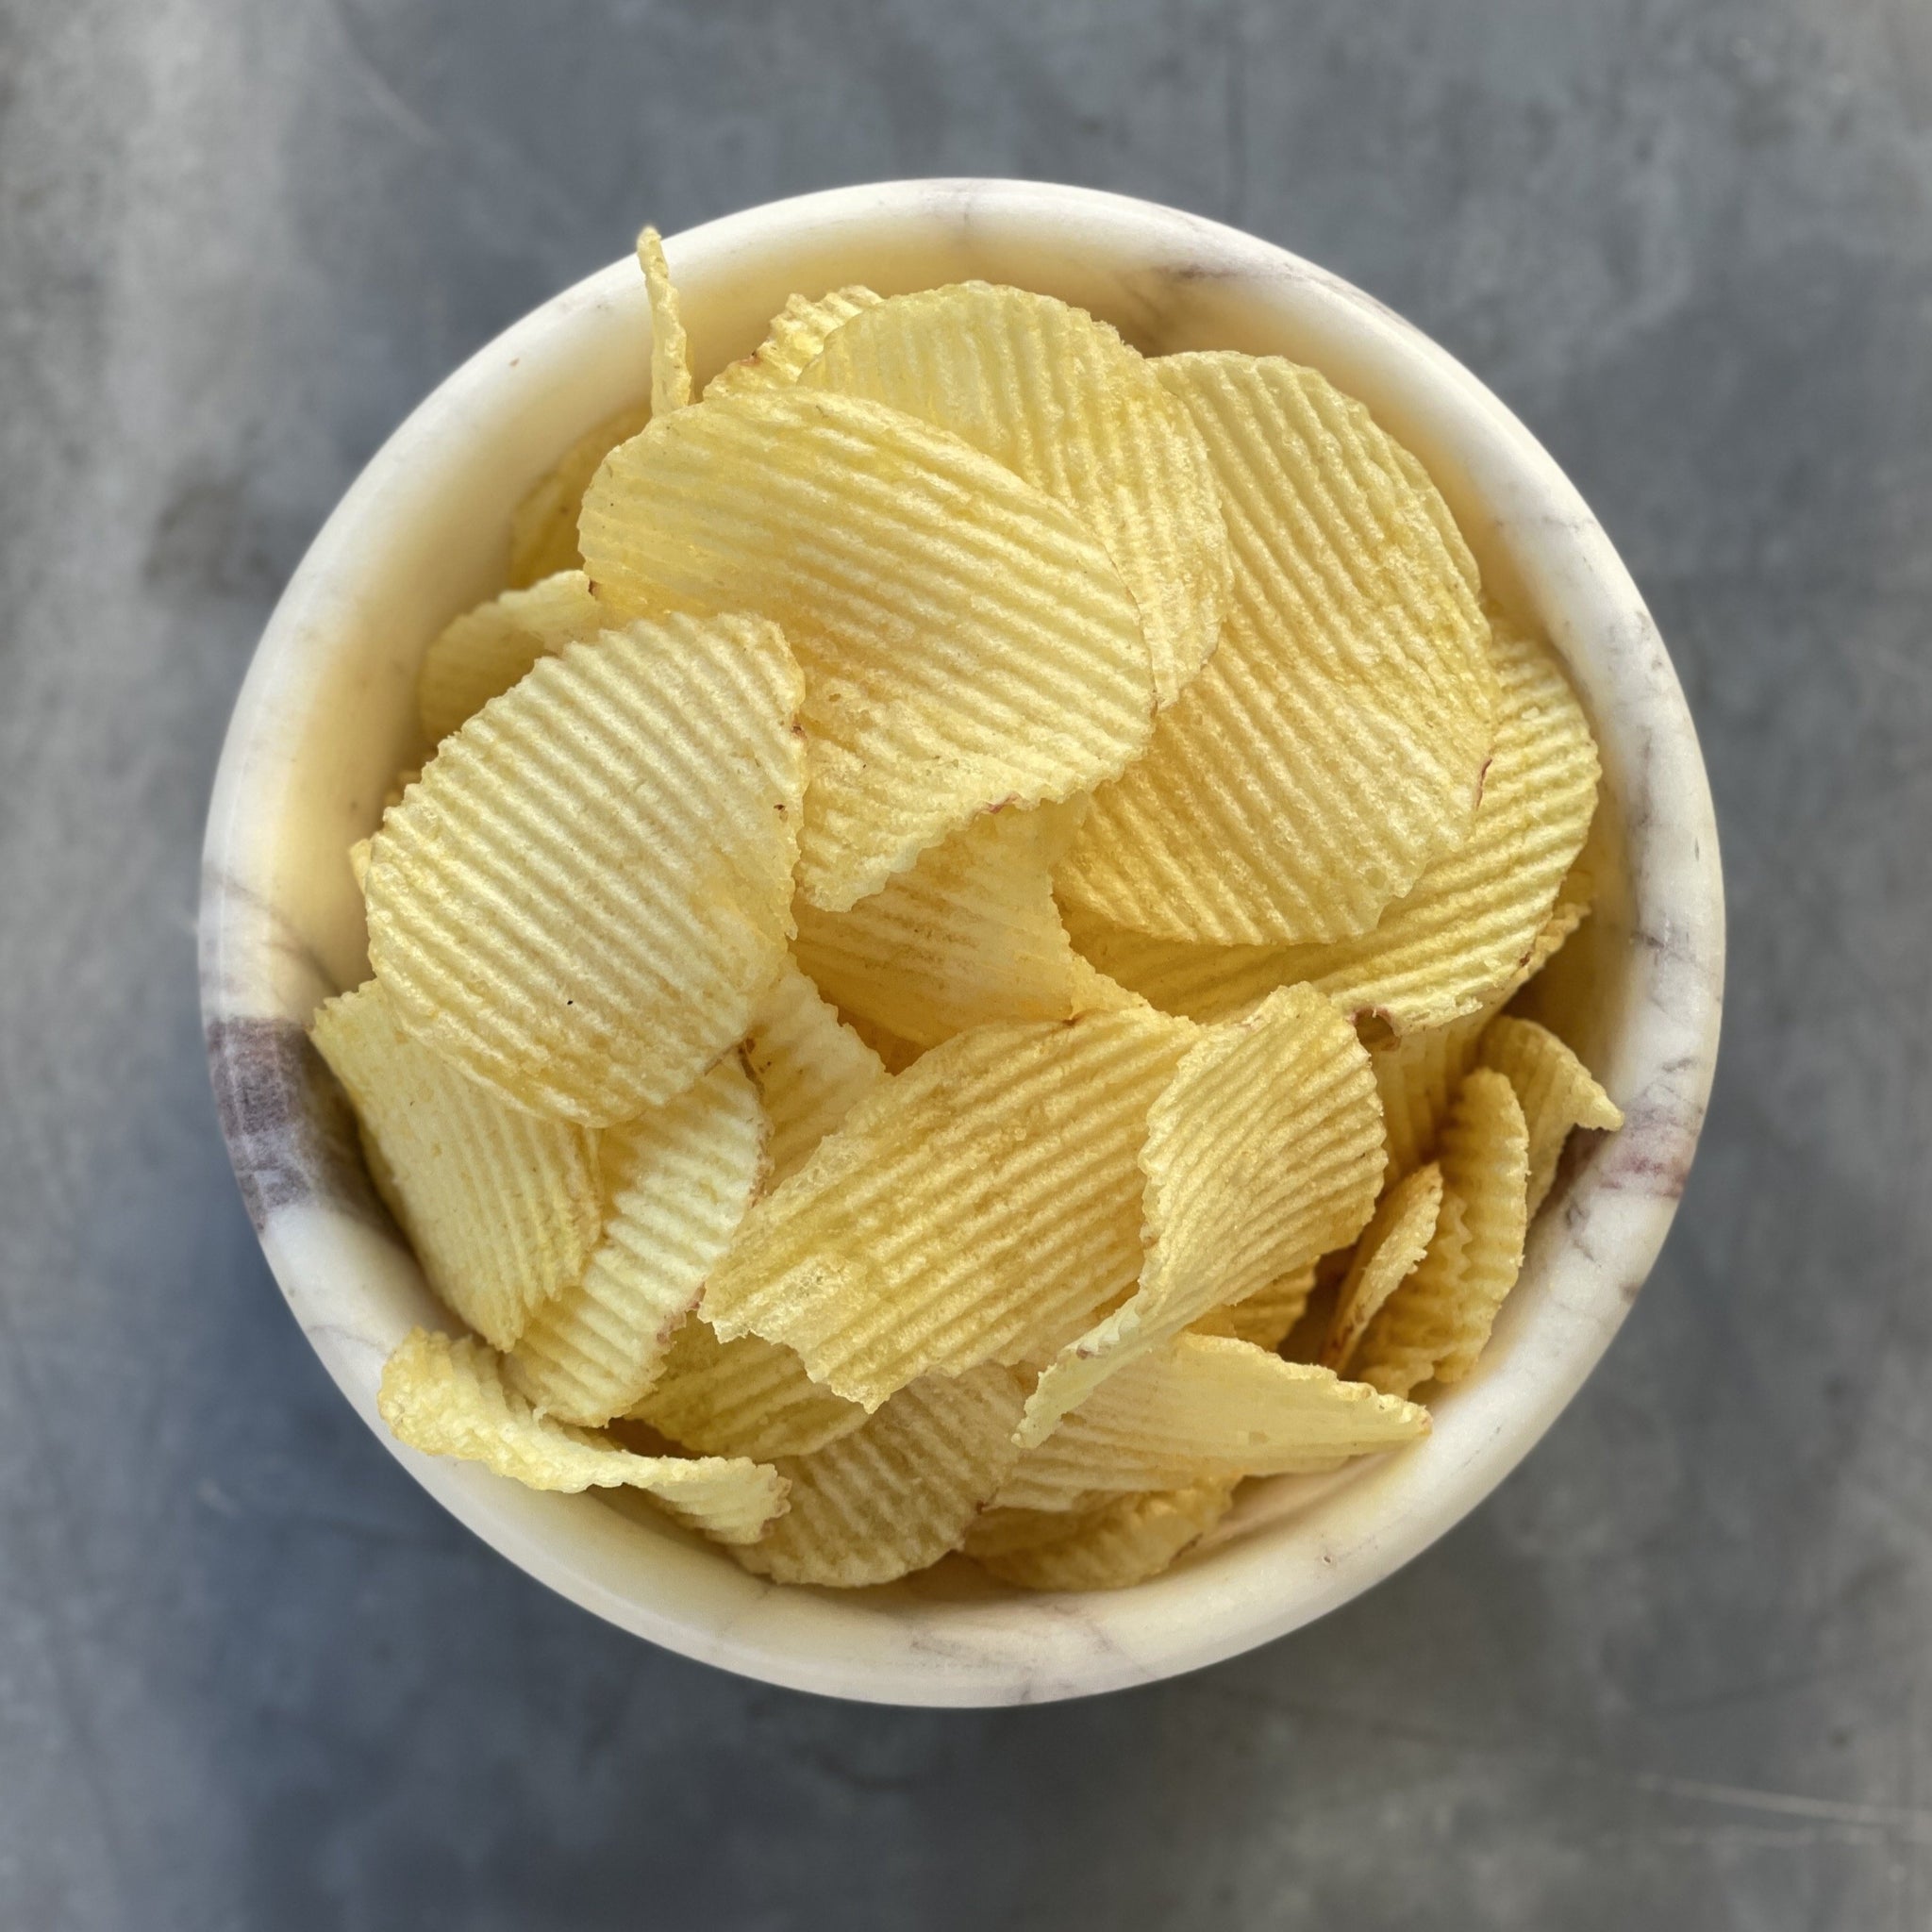 Chips Bret's au Camembert